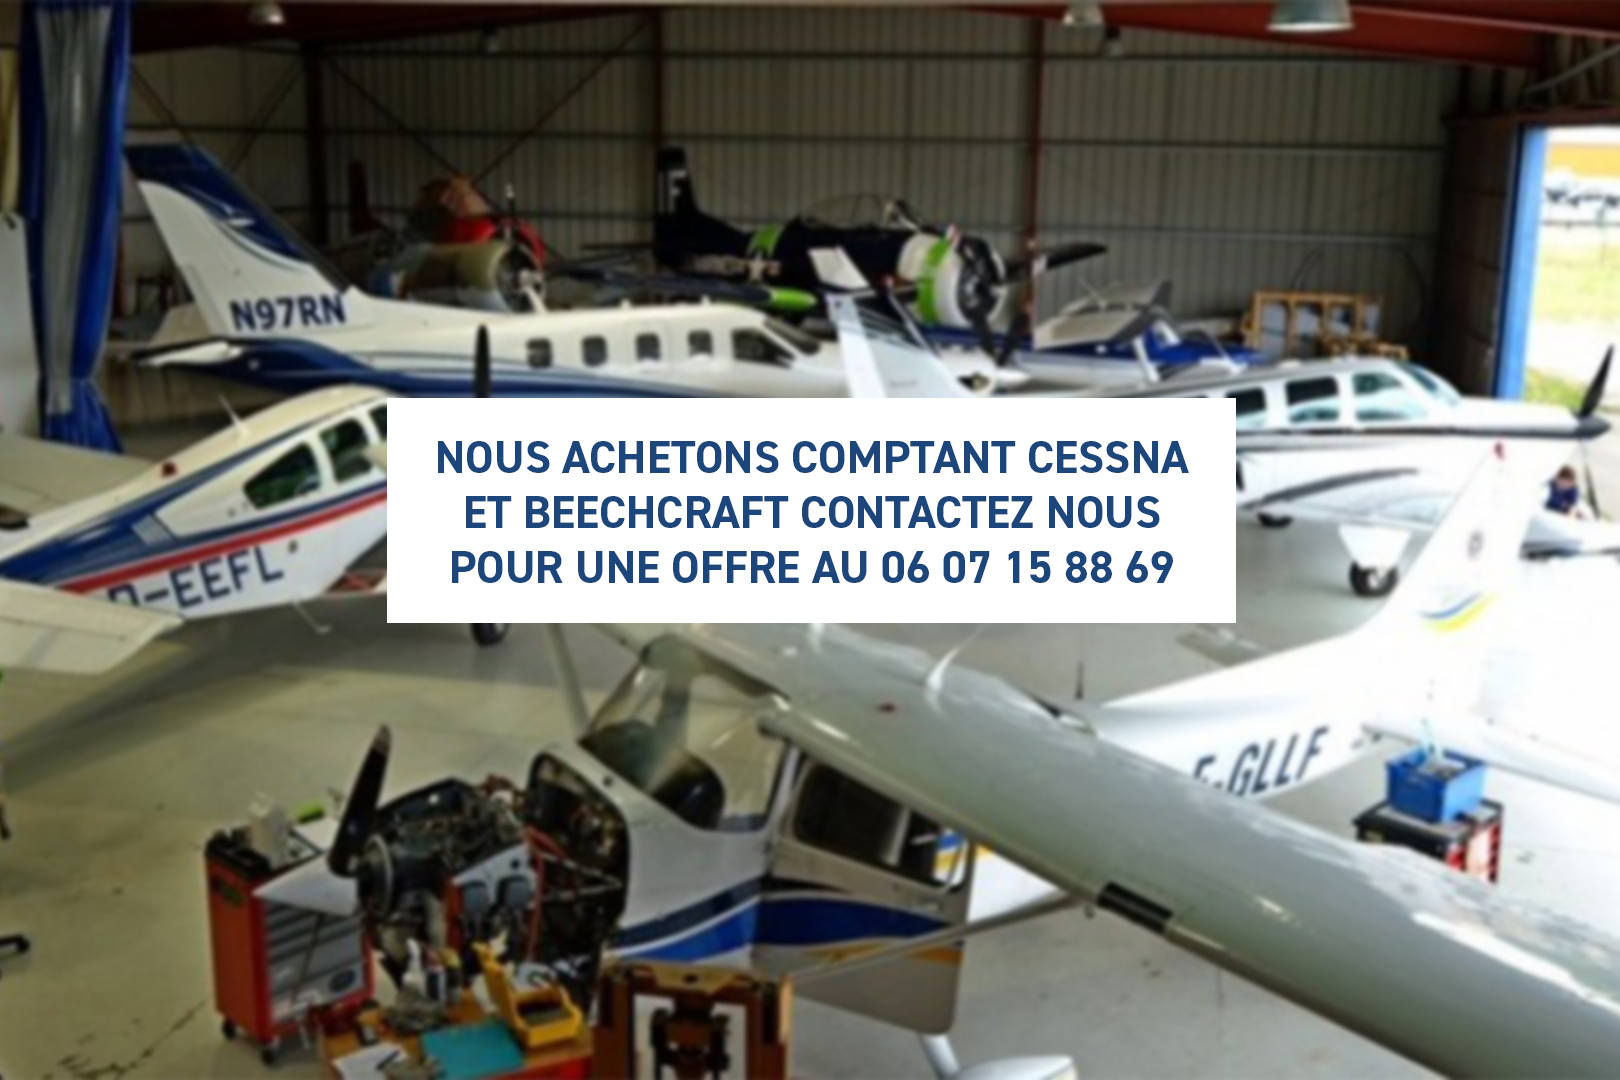 Strasbourg Aviation - Georges Kern - CESSNA